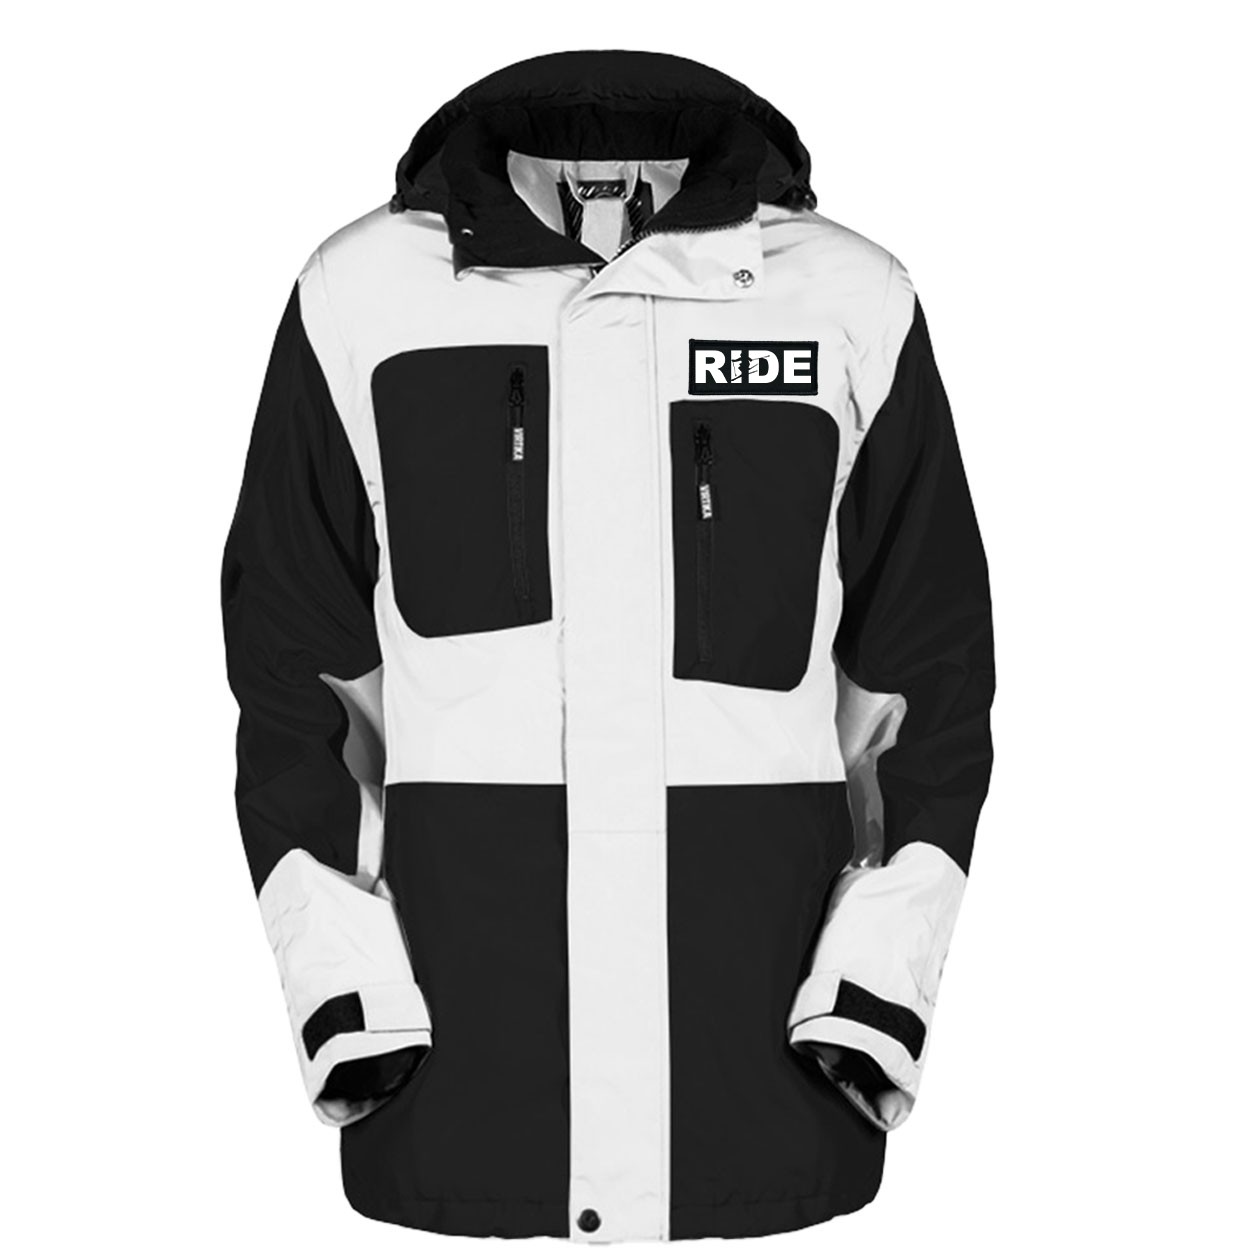 Ride Ski Logo Pro Waterproof Breathable Winter Virtika Jacket Black/White (White Logo)